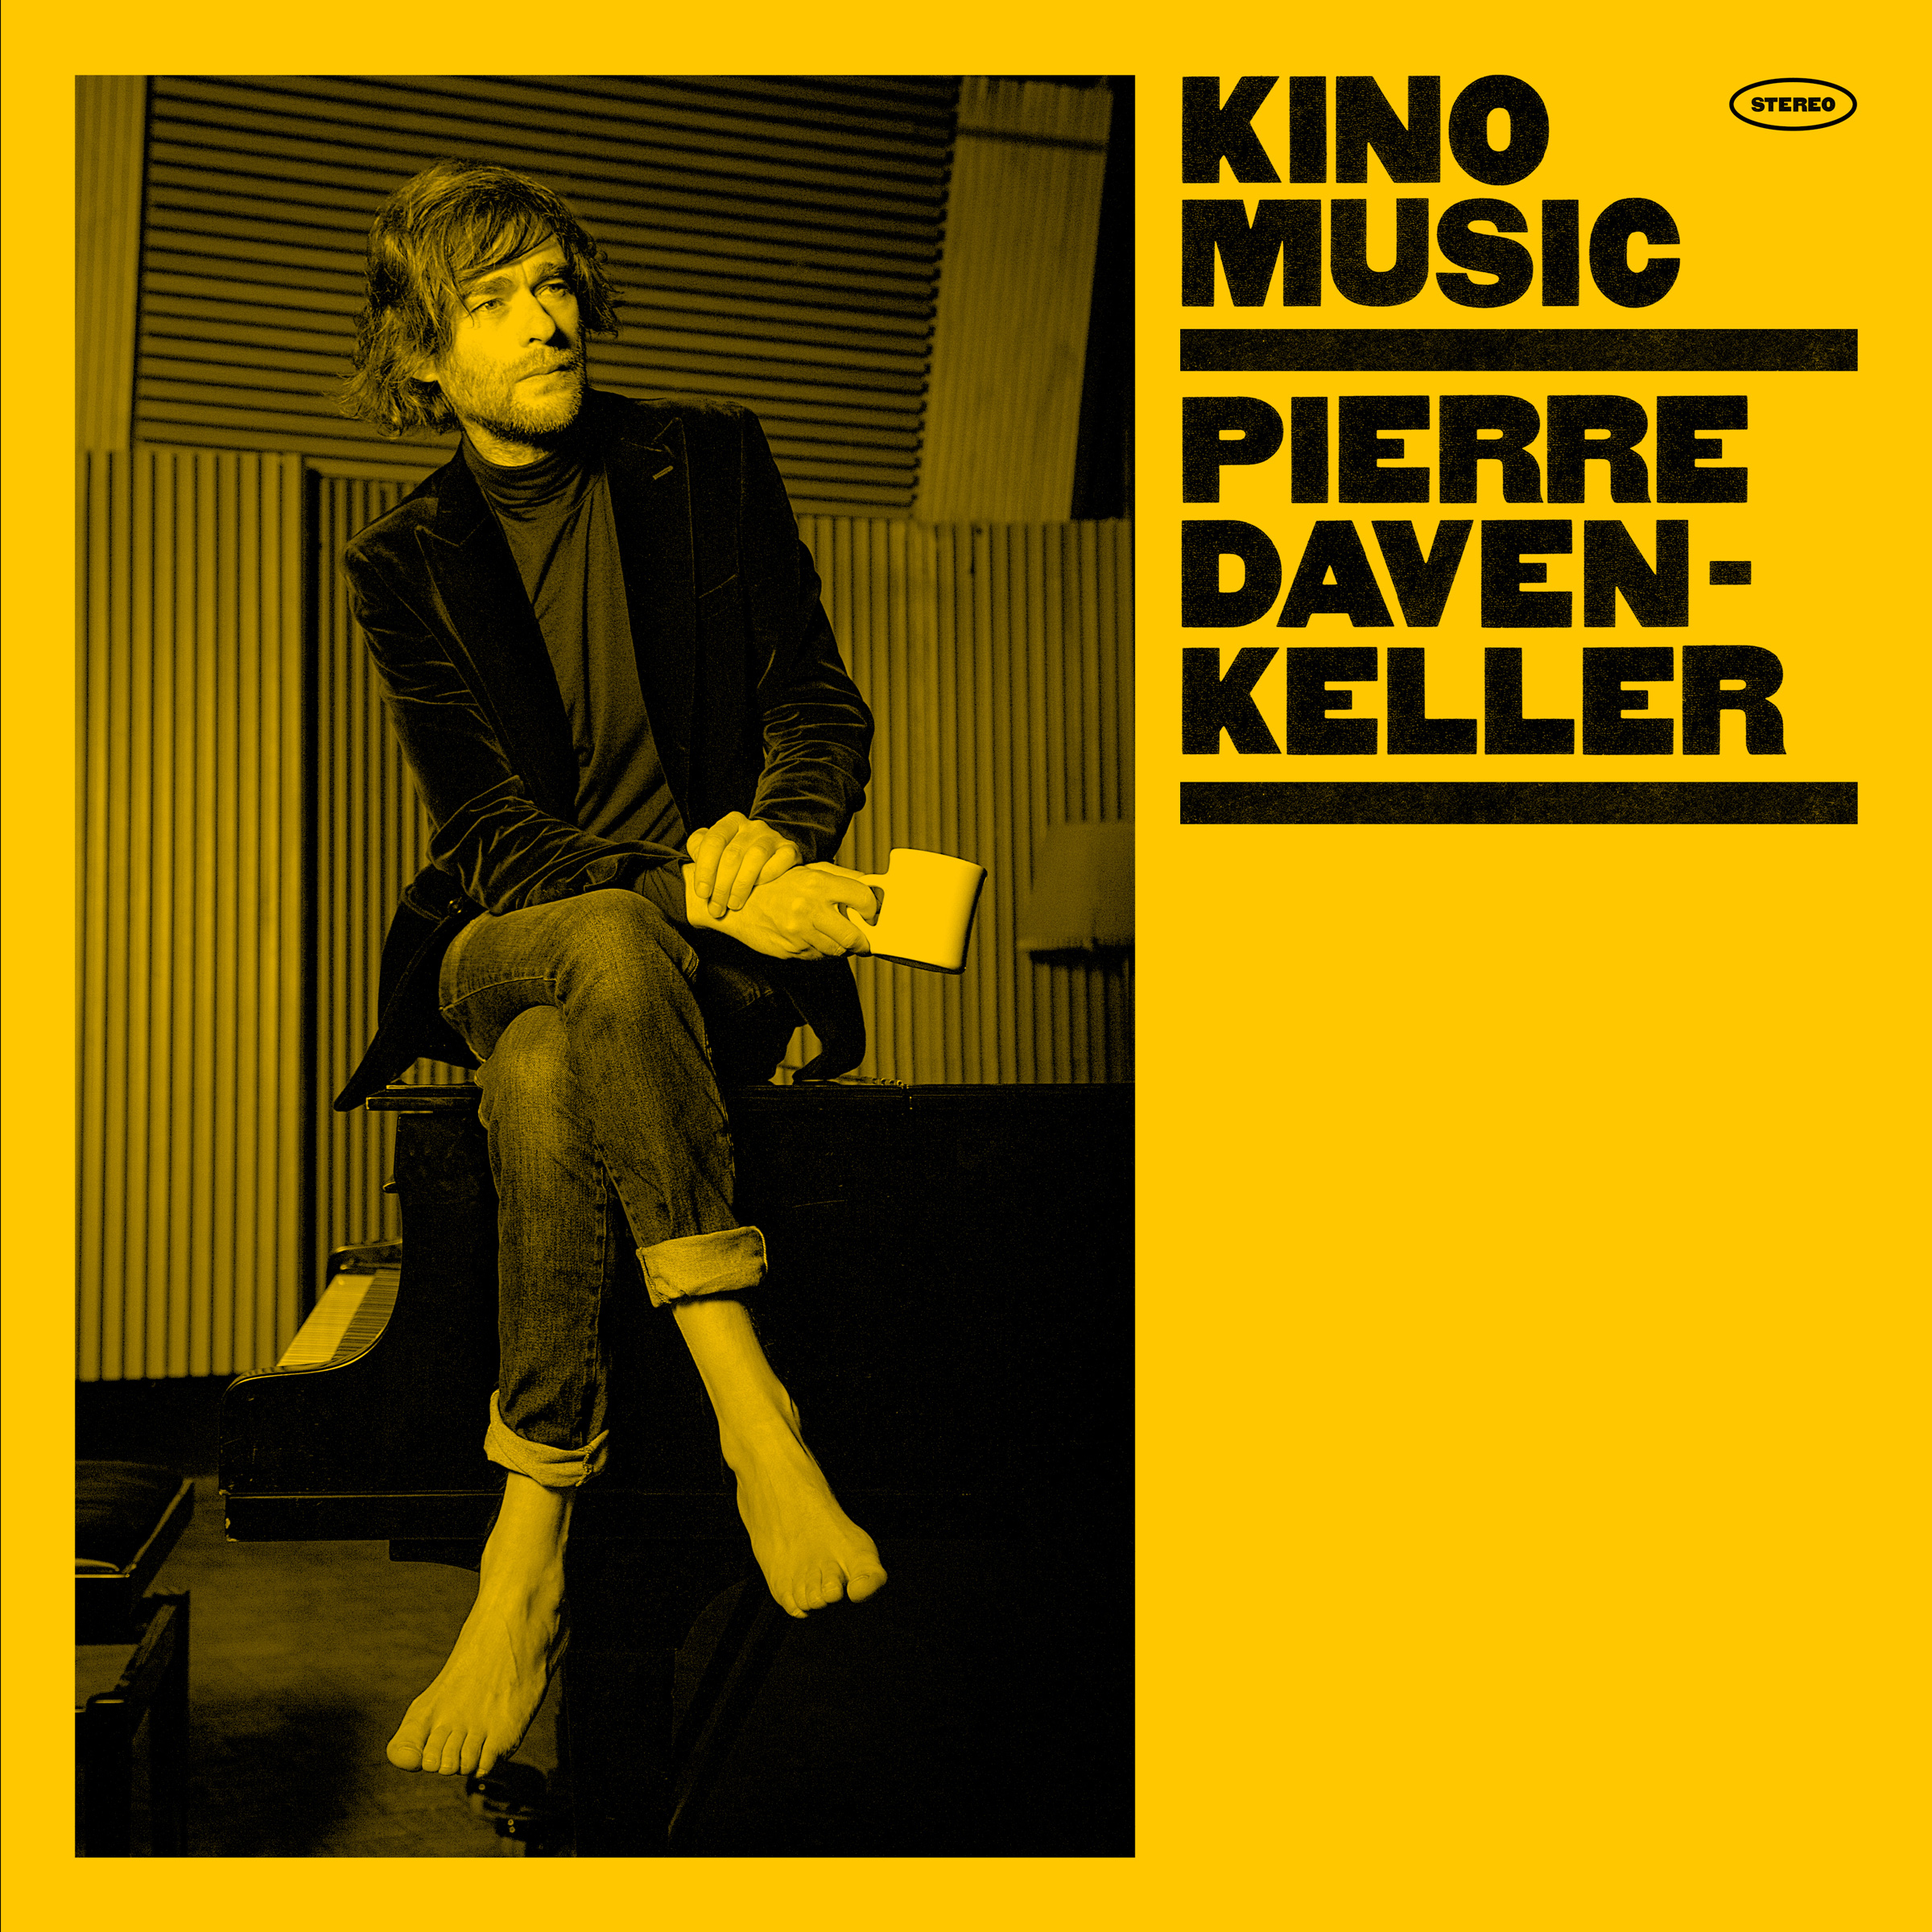 Pierre Daven-Keller dévoile Sirocco, nouveau single de son album Kino Music